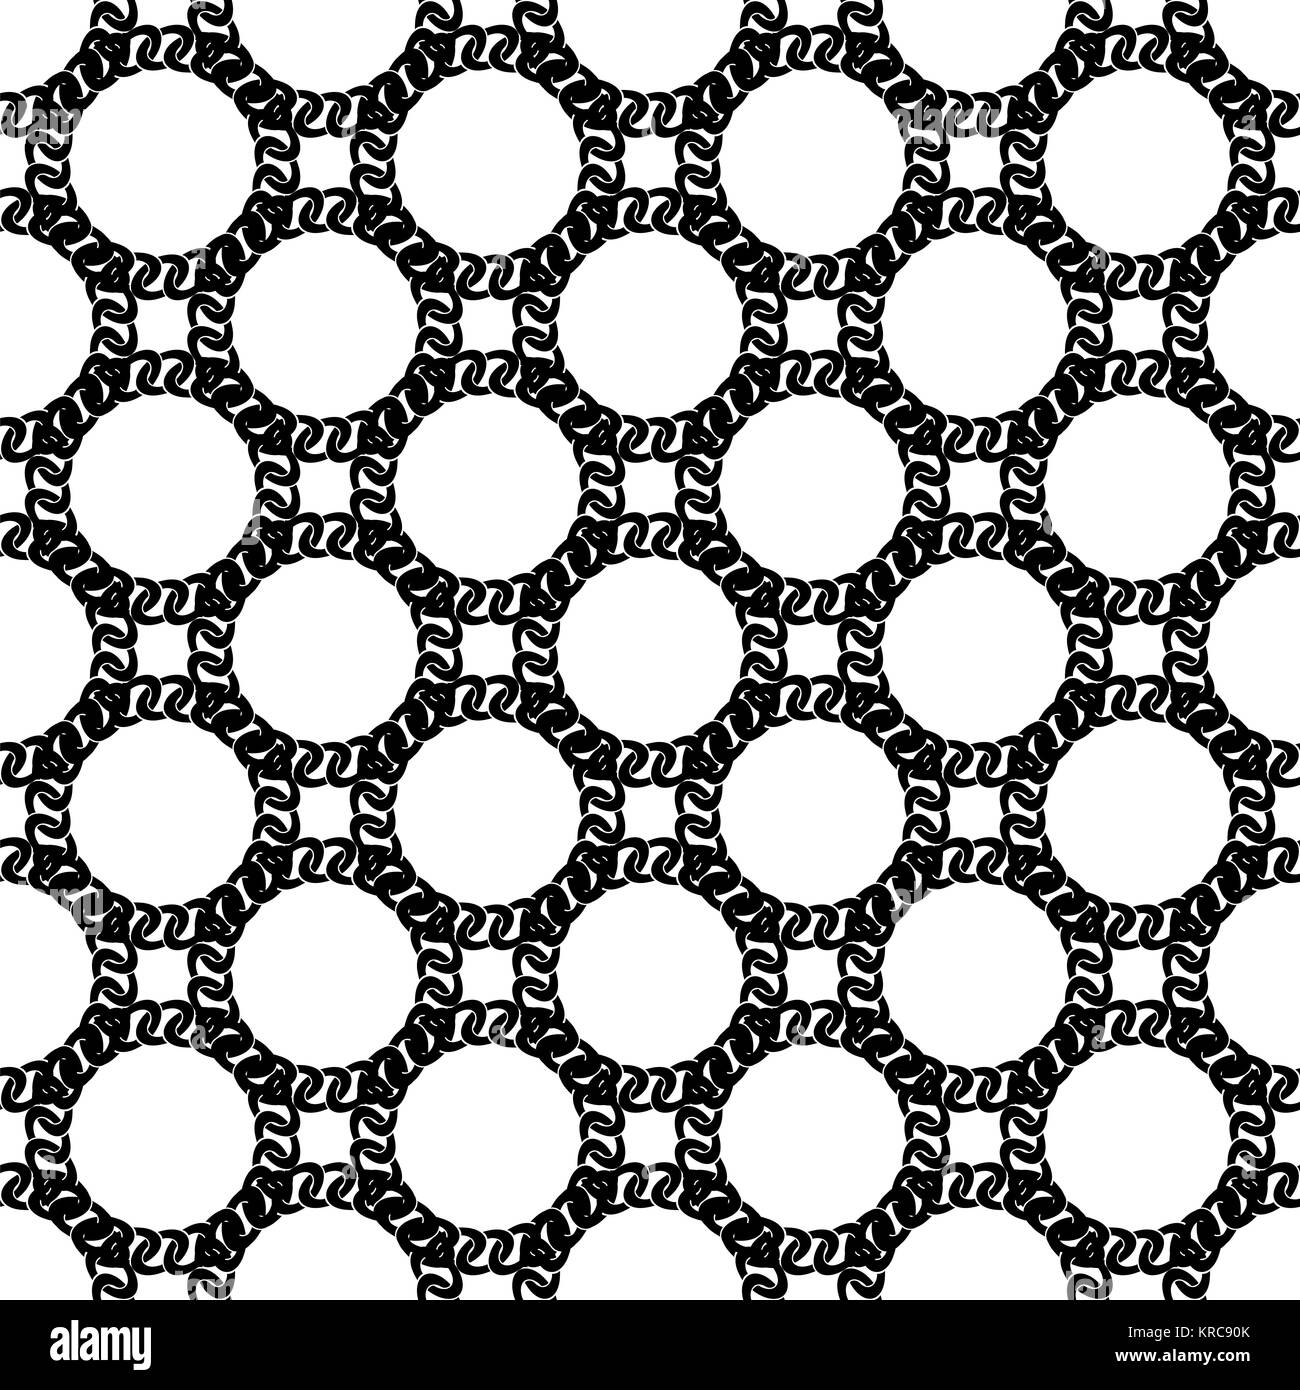 Seamless Black White Chain Pattern Stock Photo